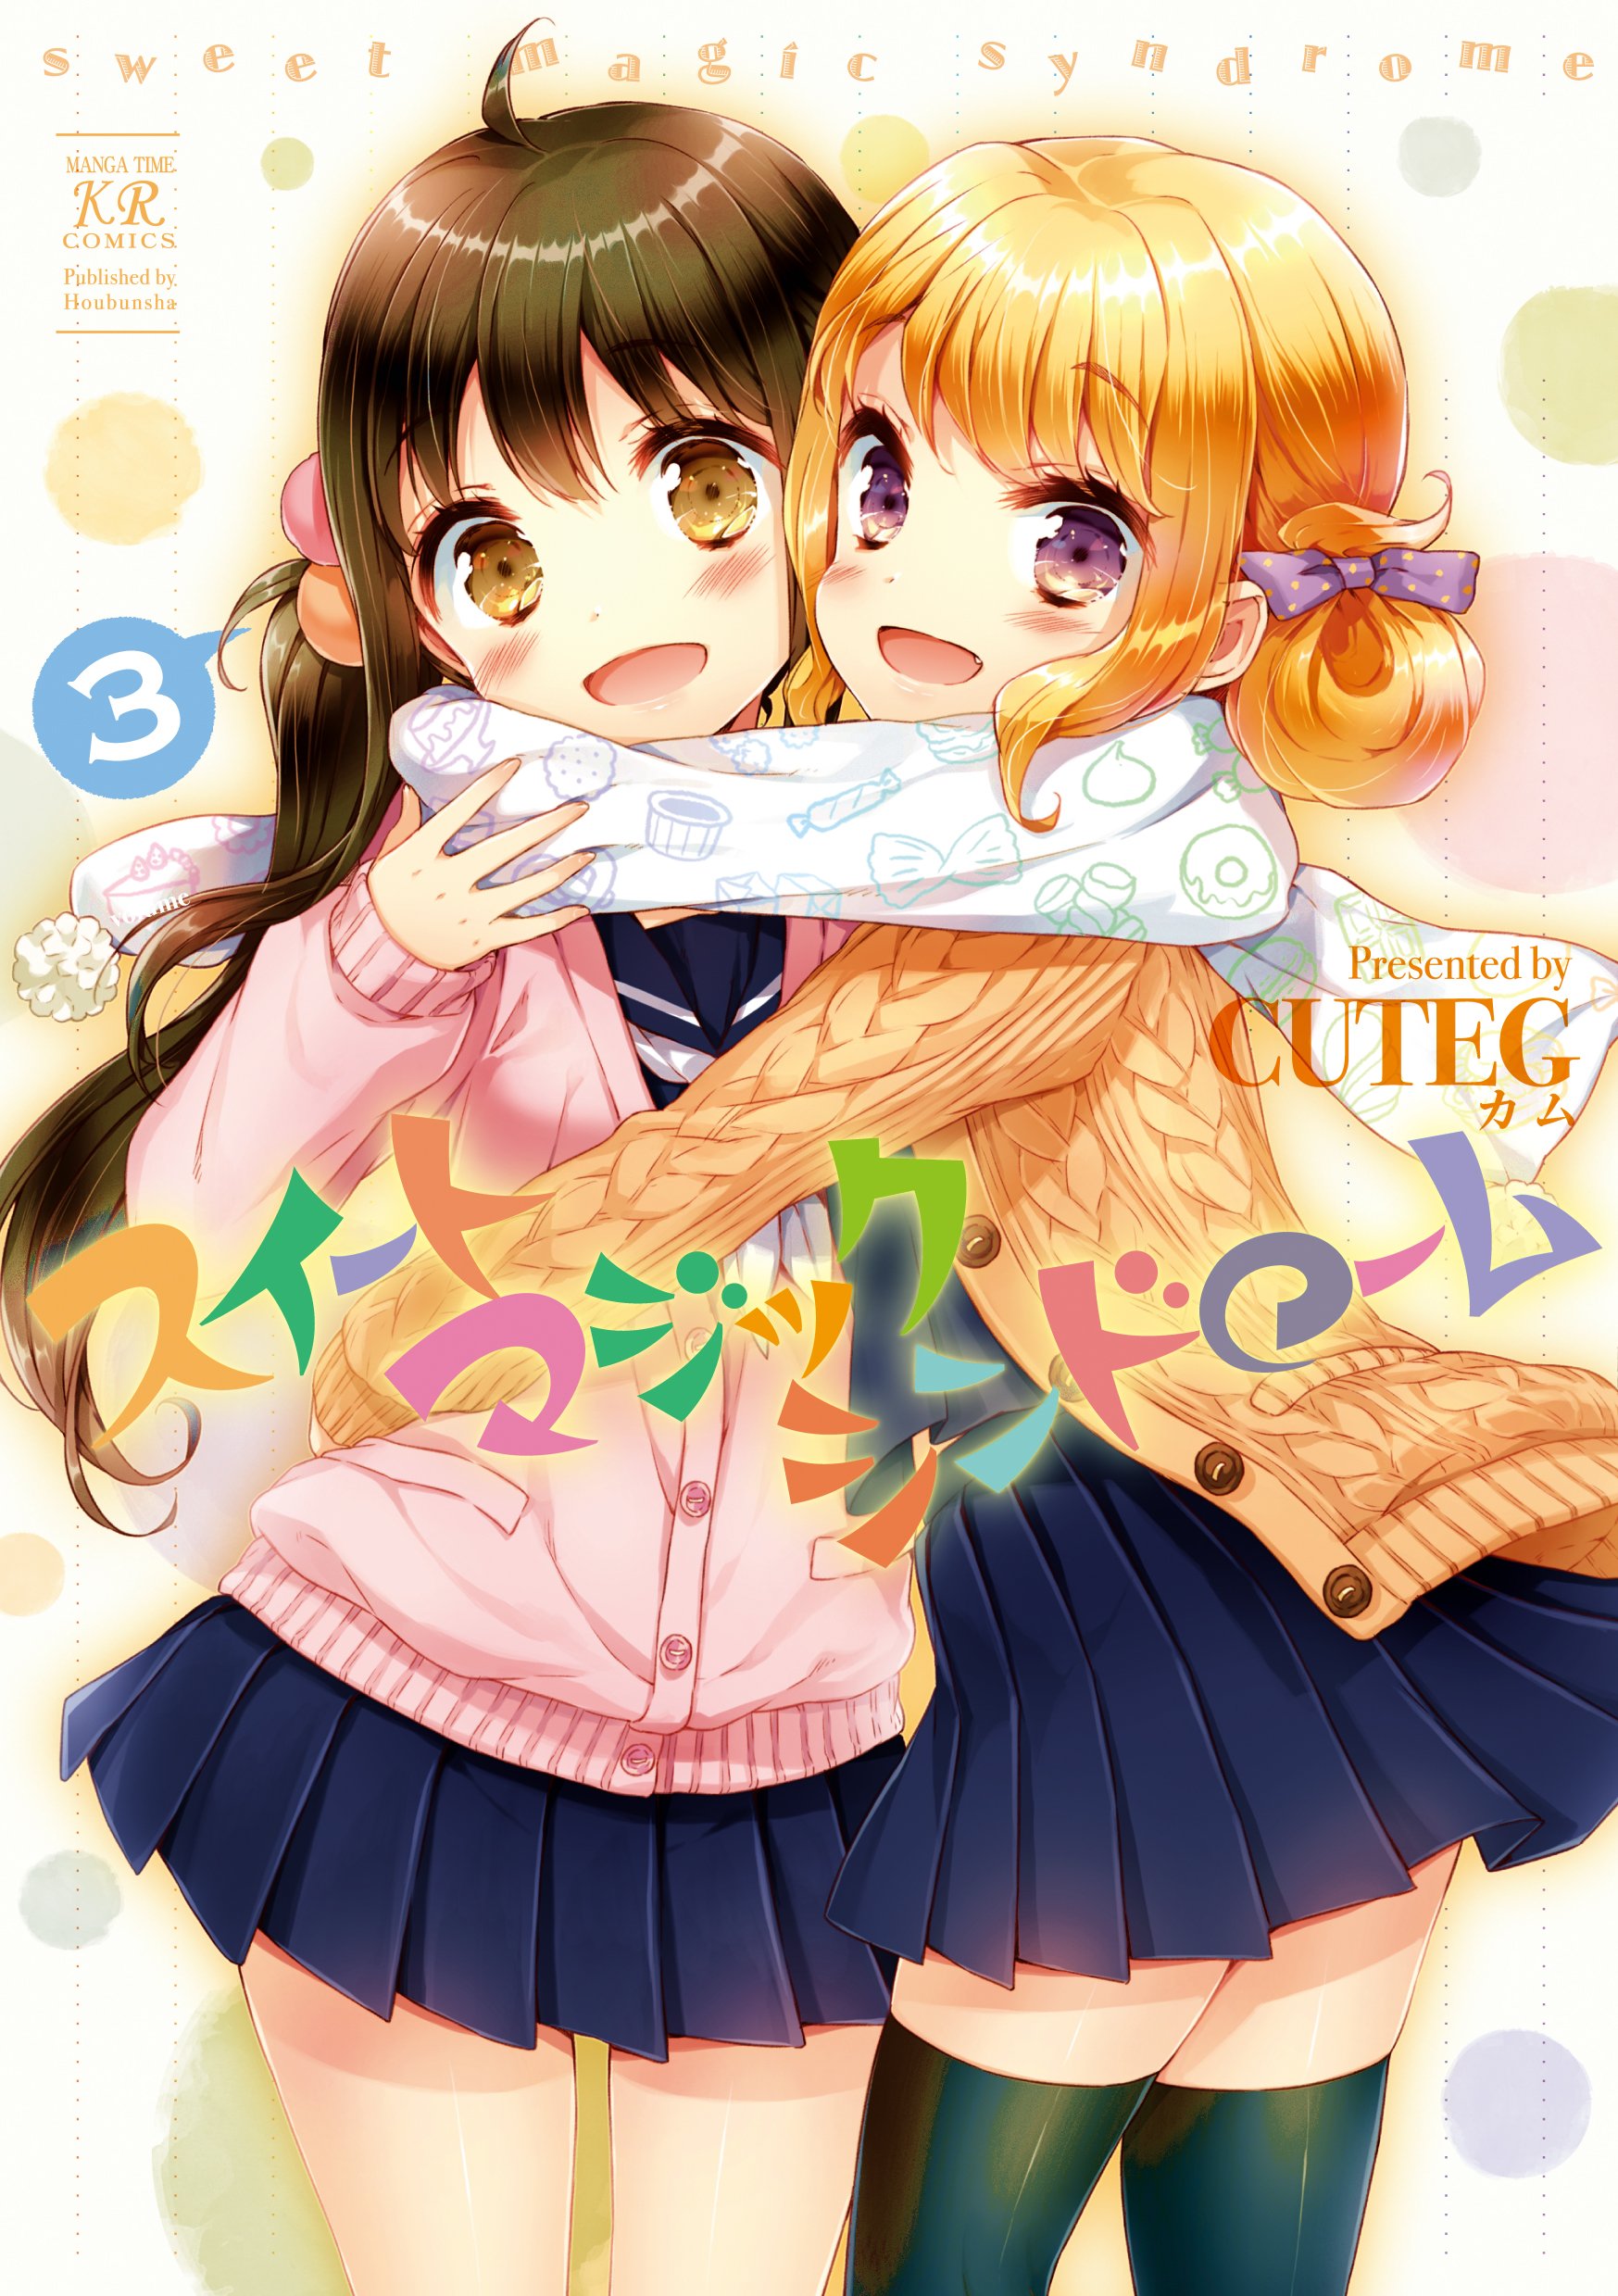 Sweet magic. Love Syndrome Manga. Cuteg kamuji author.